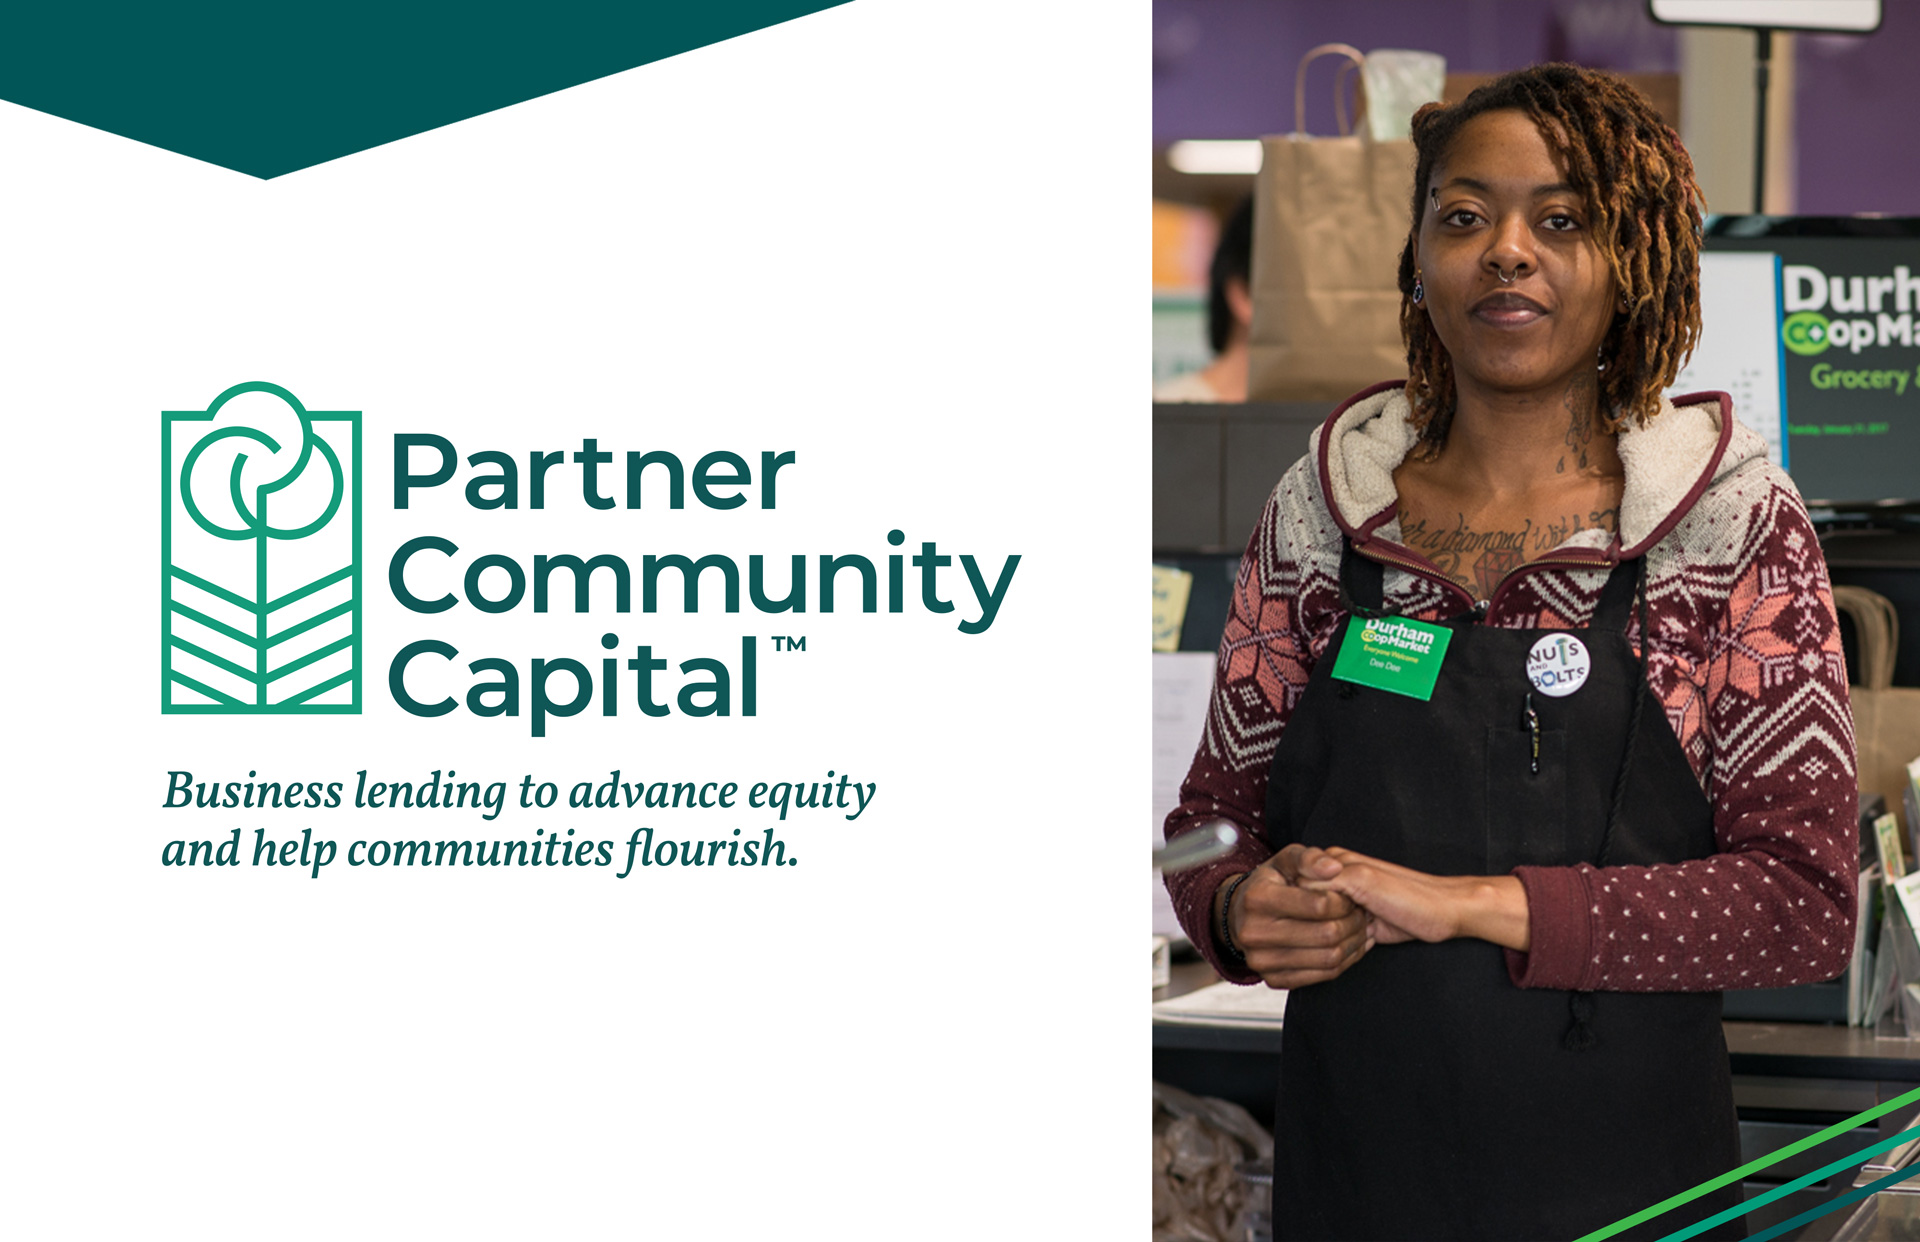 Partner Community Capital Logo